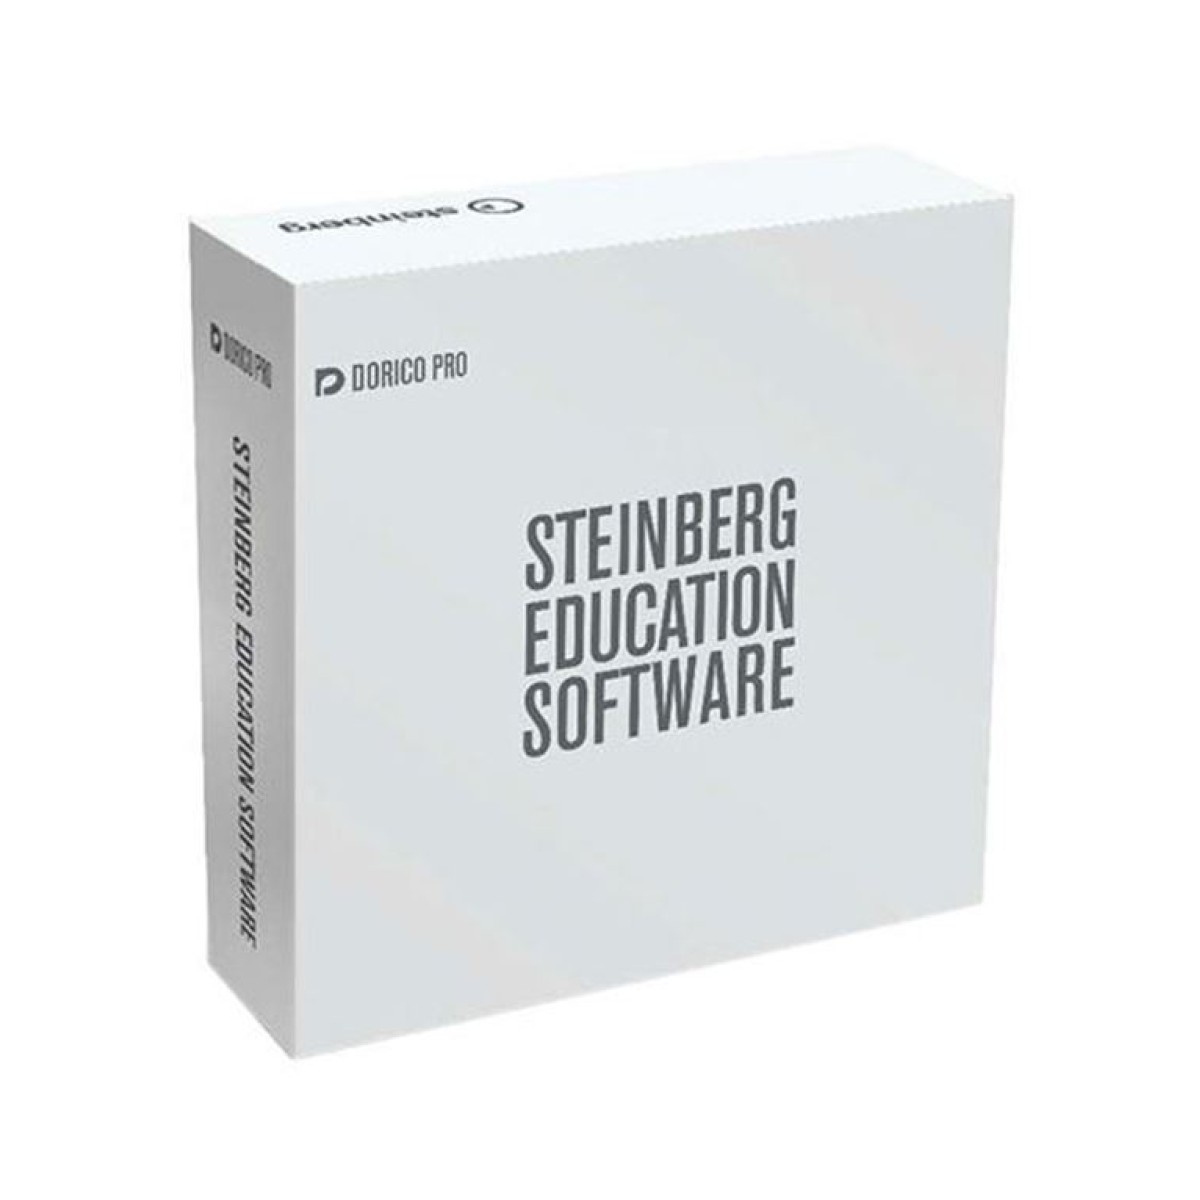 STEINBERG Dorico Pro 3 Crossgrade Eκπαιδευτική Eκδοση( με δωρεάν αναβάθμιση σε Pro 5 Edu)